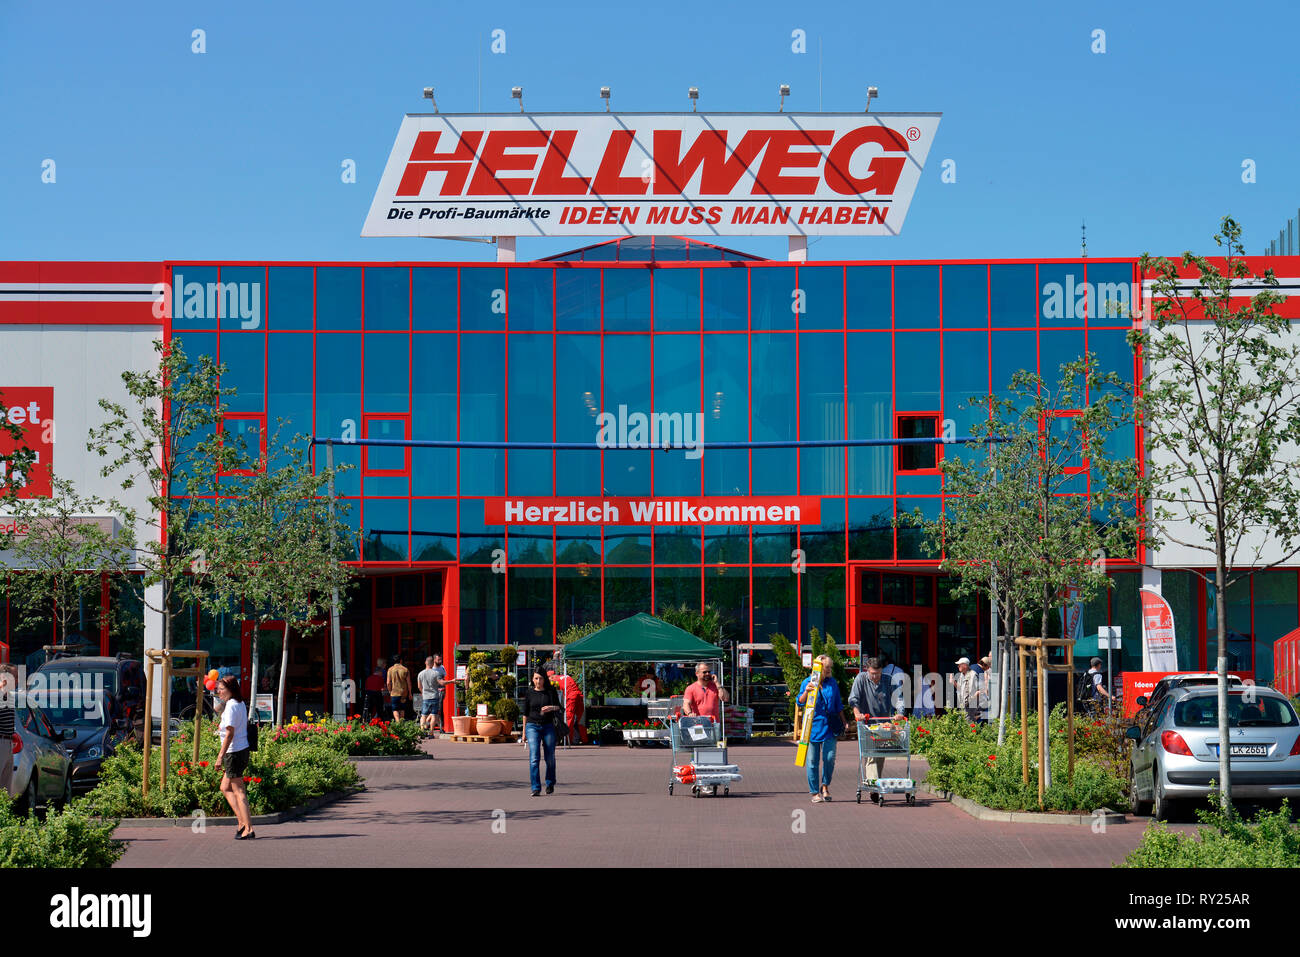 Hellweg Baumarkt High Resolution Stock Photography and Images - Alamy